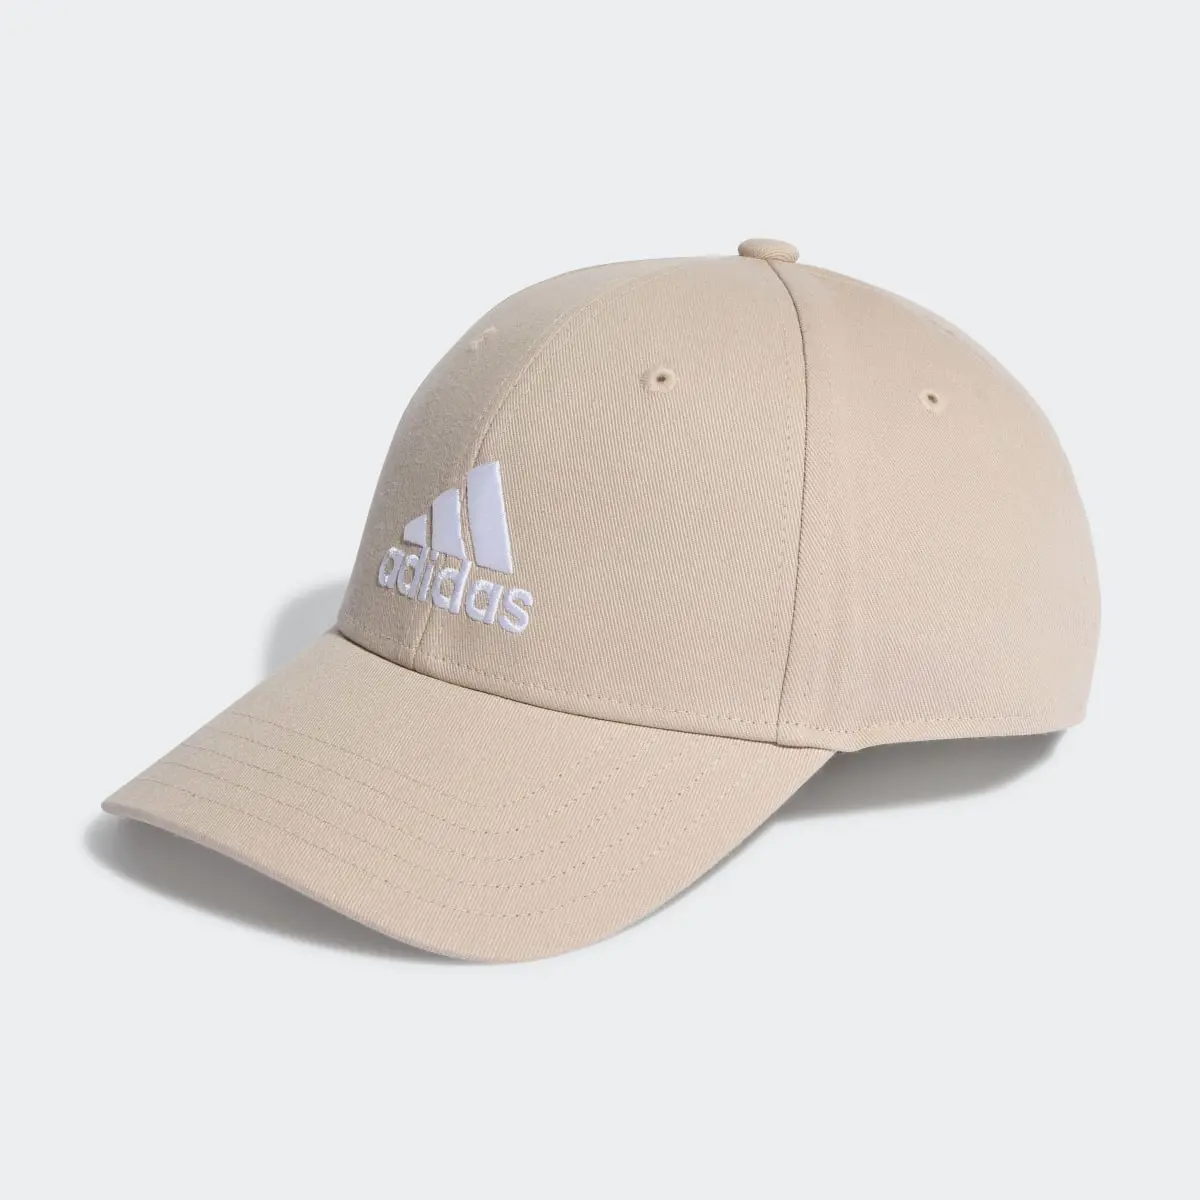 Adidas Baseball Hat. 2